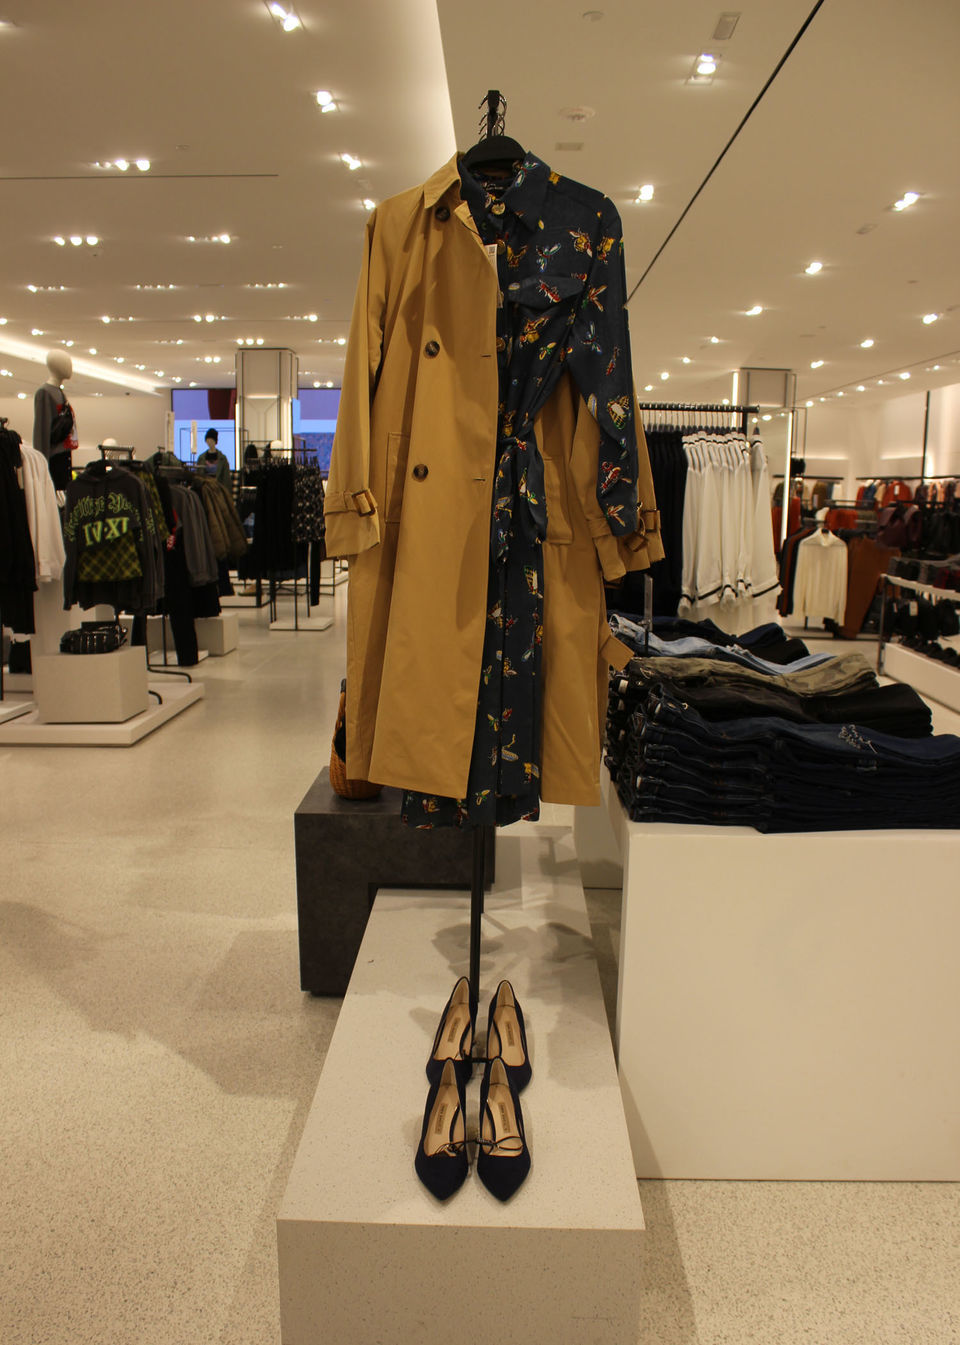 Zara will open at Lakeside Shopping Center on Thursday | Business News ...